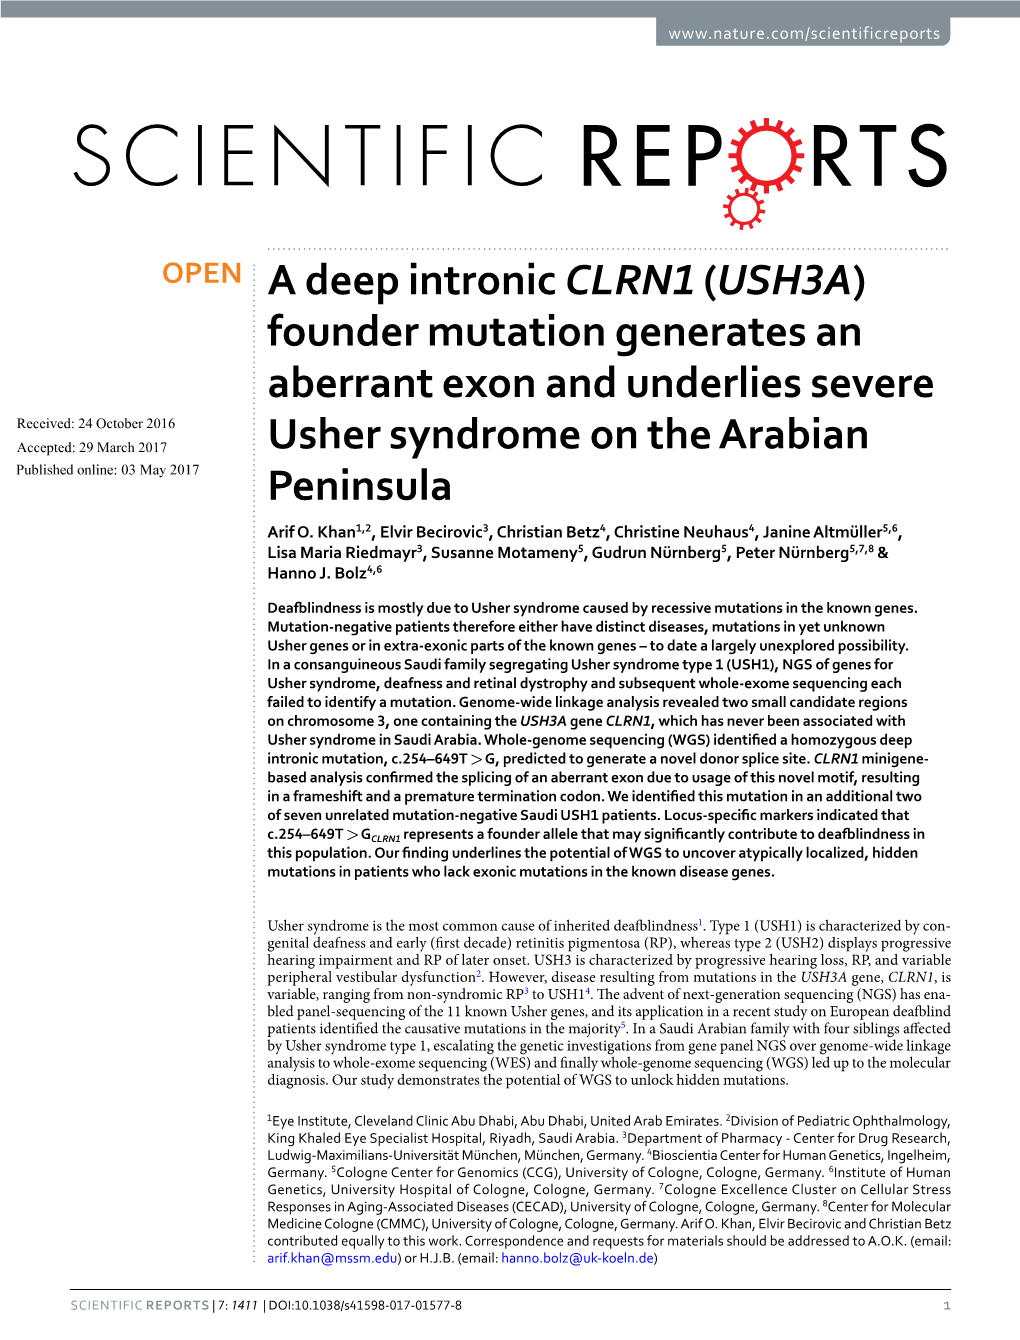 A Deep Intronic CLRN1 (USH3A) Founder Mutation Generates An